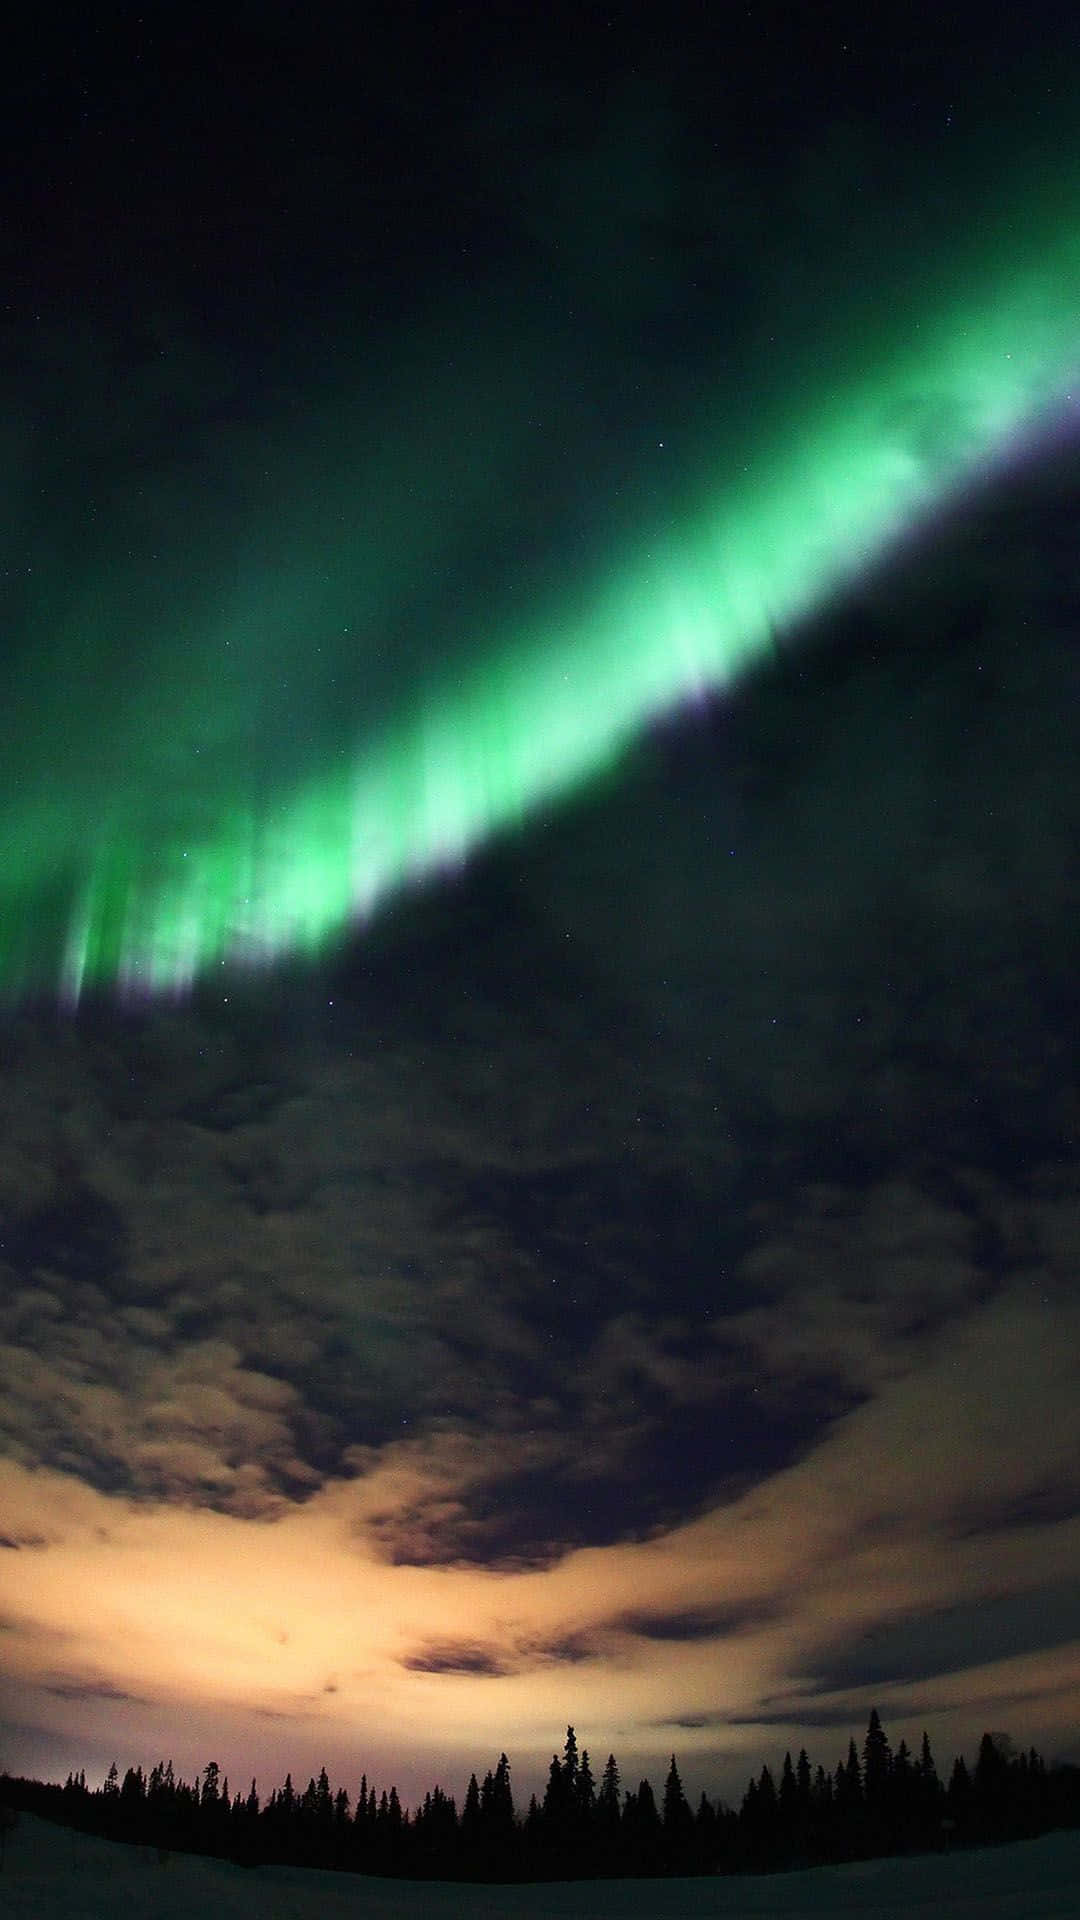 Captivating display of the Aurora Borealis or Northern Lights